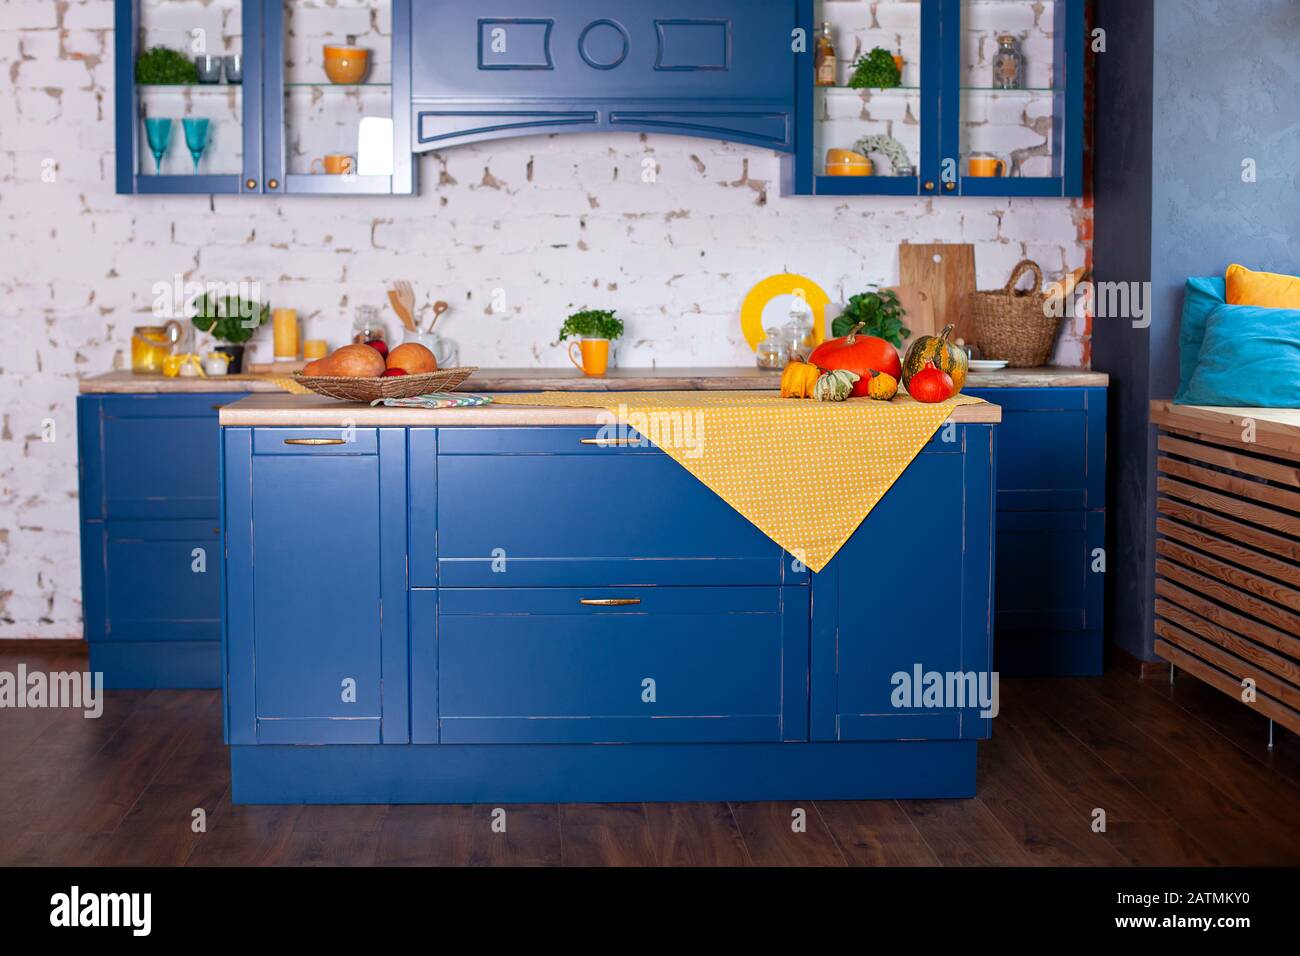 Interior de cocina azul moderno con interior de cocina de muebles